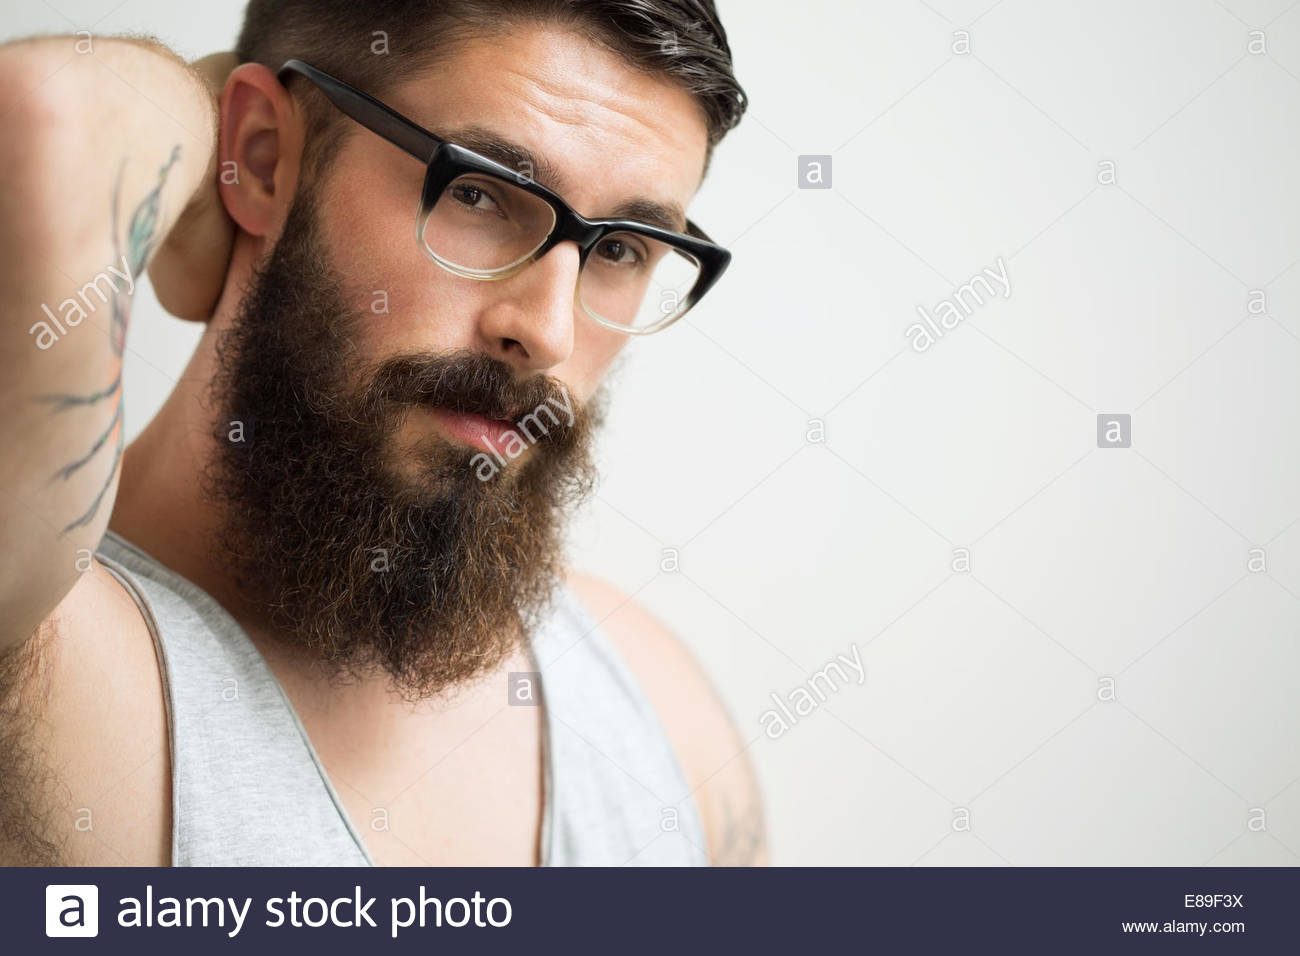 Portrait of brunette man with beard wearing eyeglasses Stock Photo